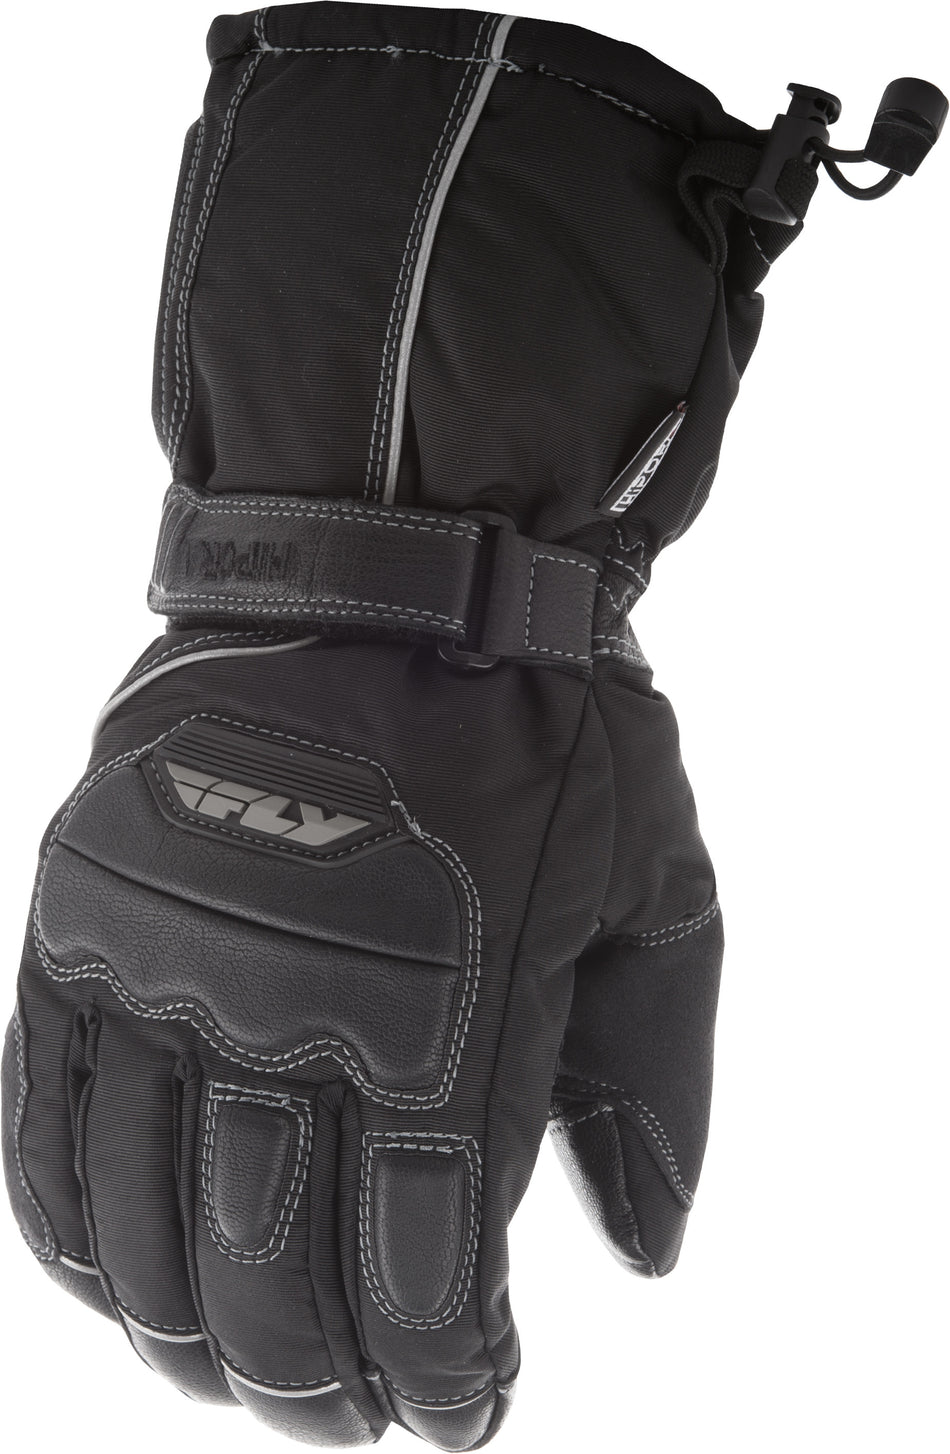 FLY RACING Aurora Gloves Black Lg 363-3891L